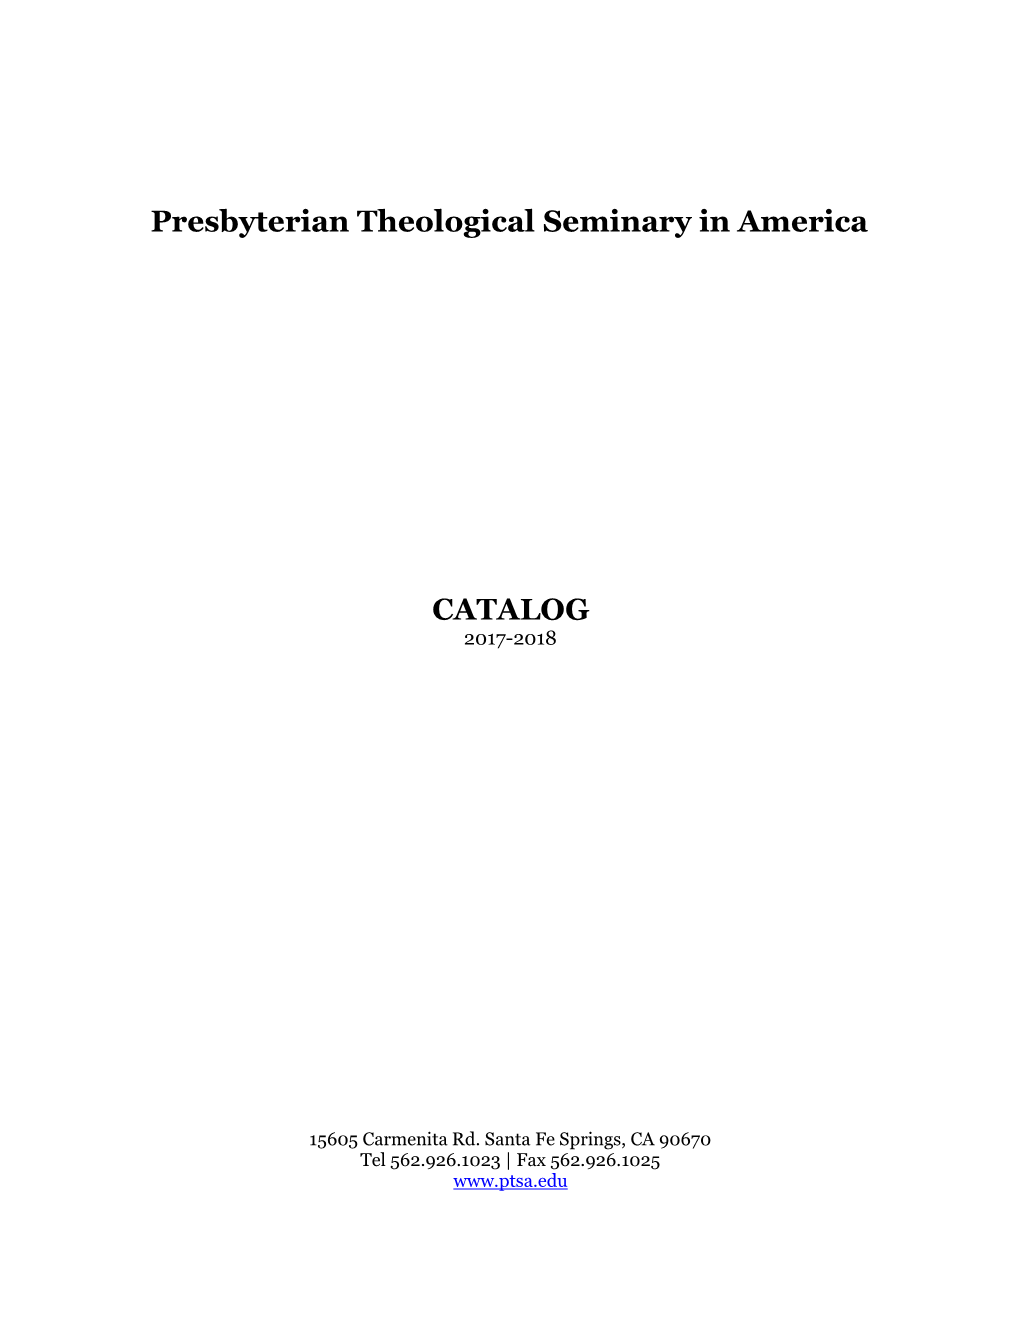 Presbyterian Theological Seminary in America Catalog)